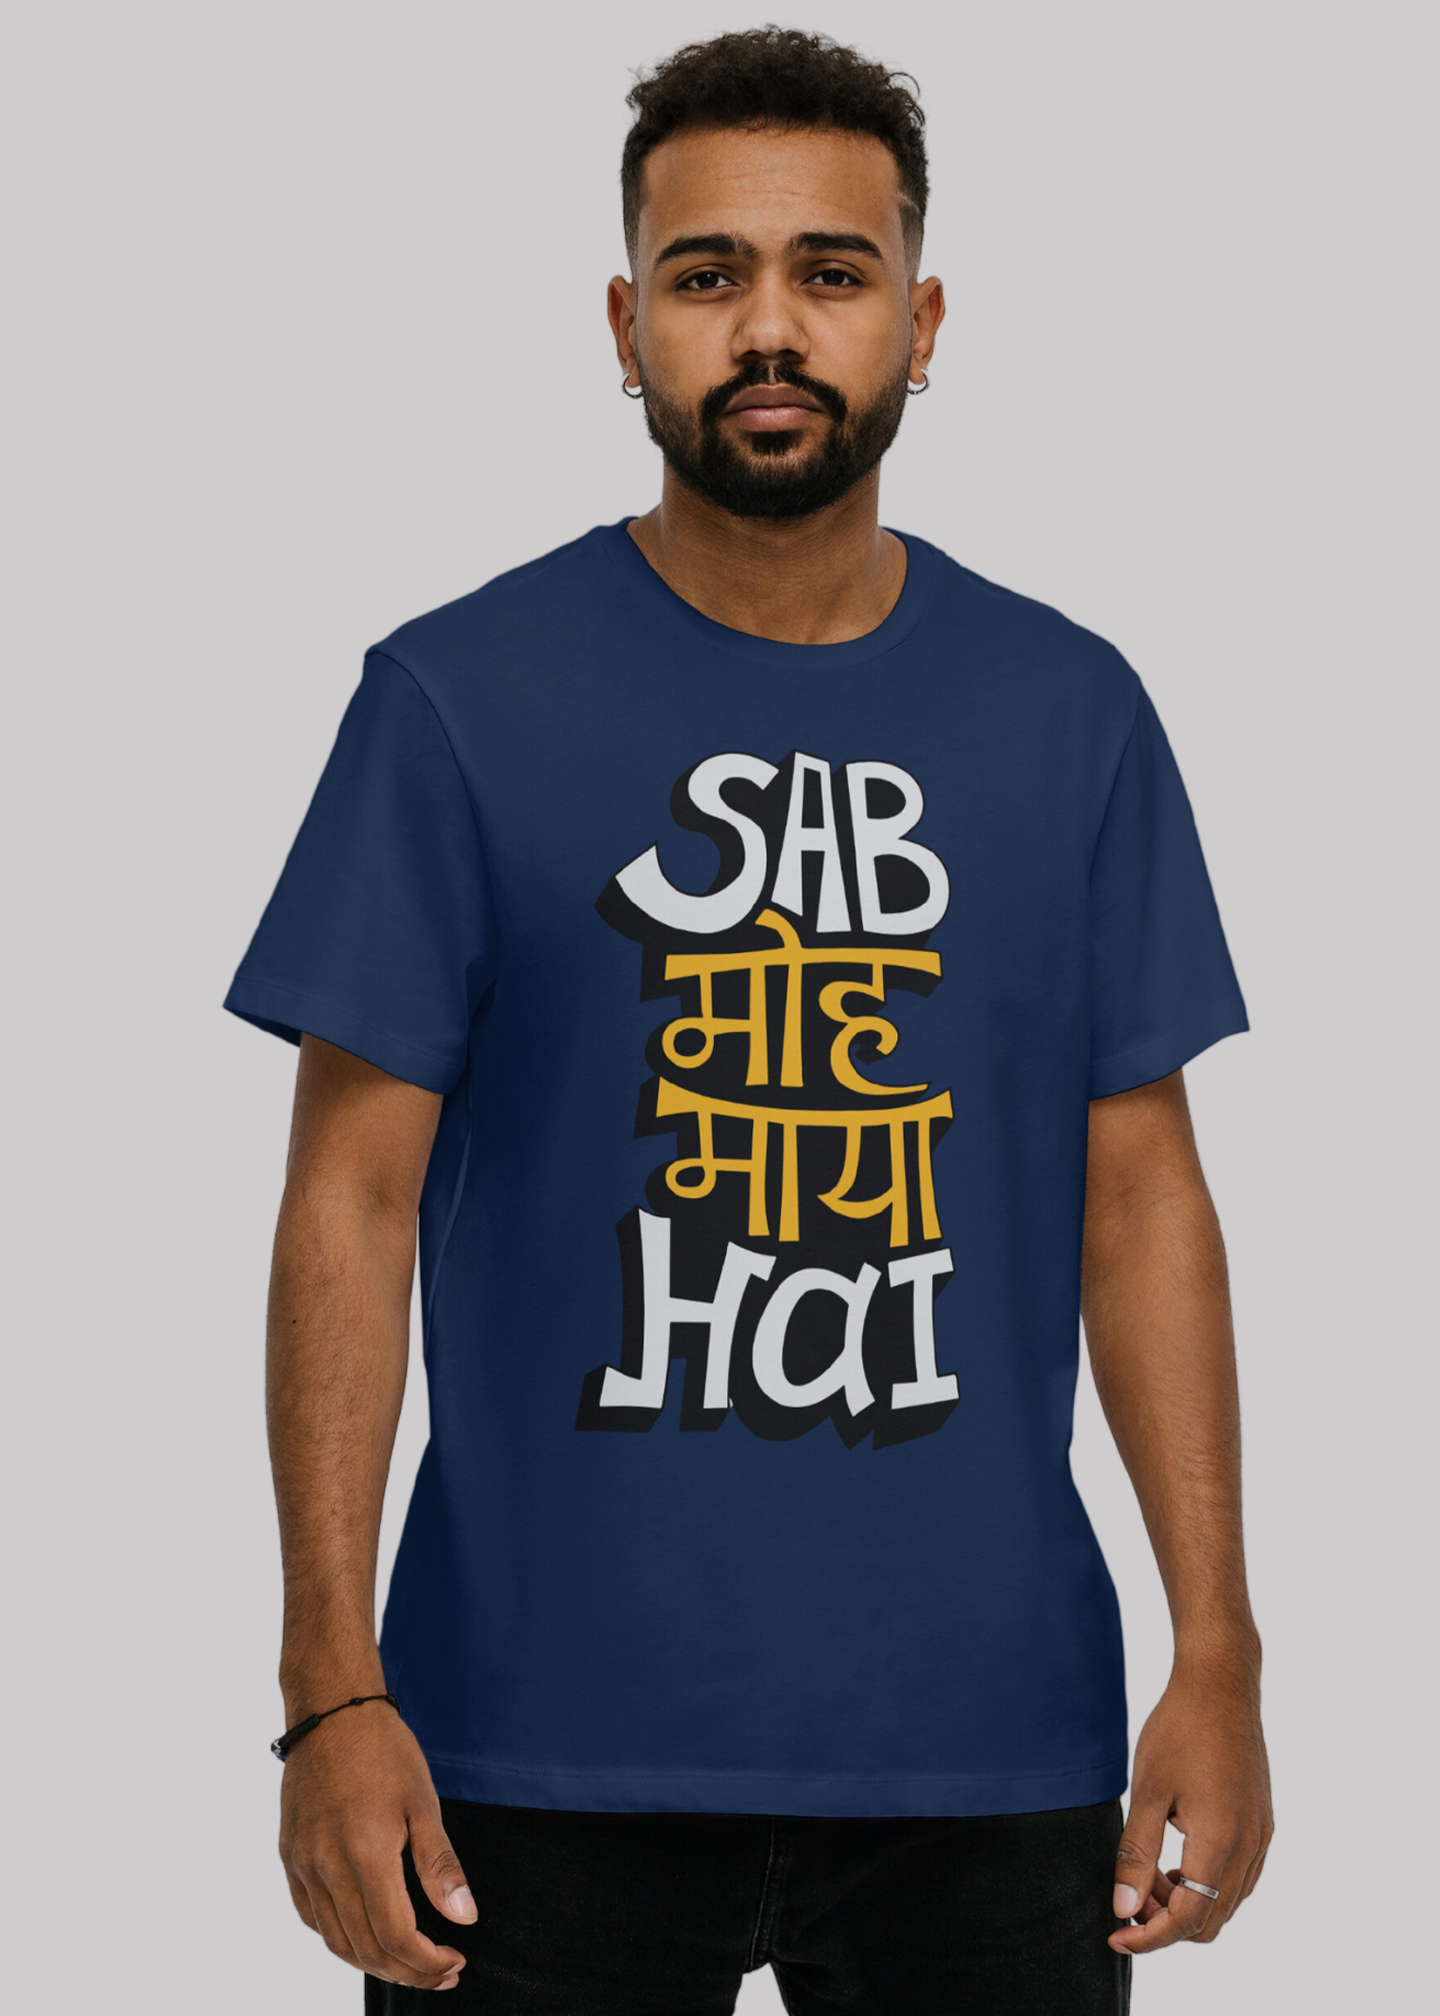 Saab moho maya hai Printed Half Sleeve Premium Cotton T-shirt For Men